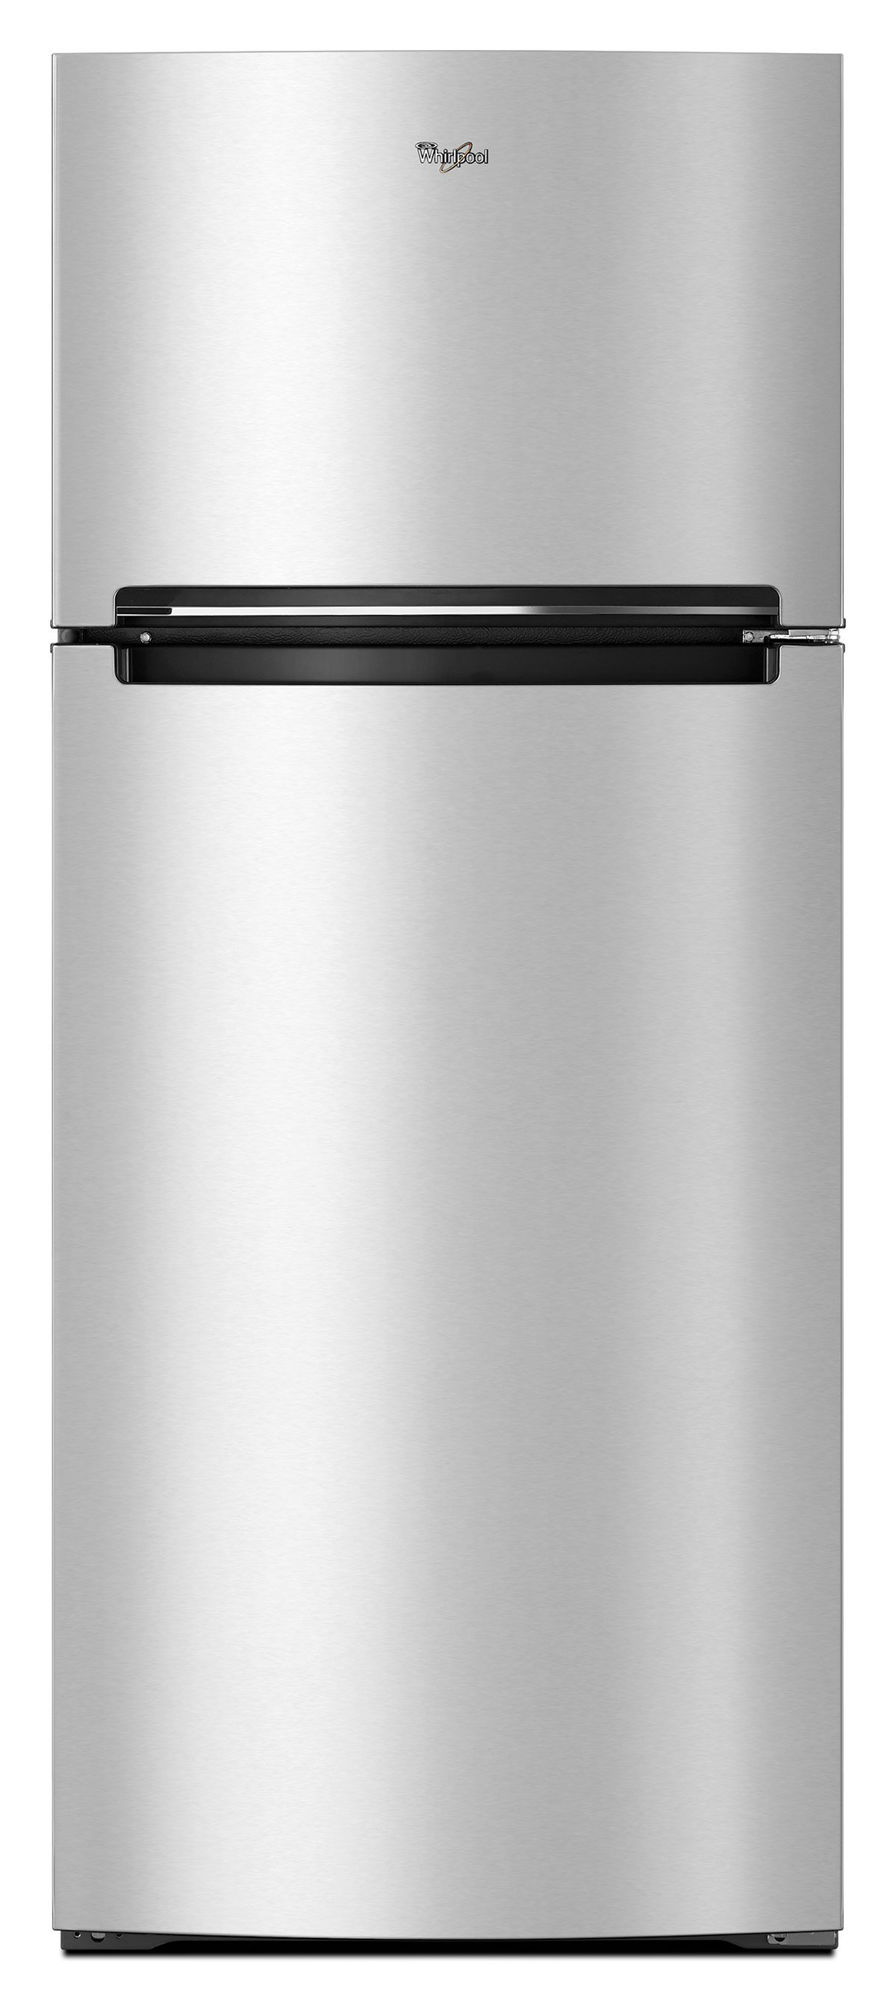 https://www.badcock.com/images/thumbs/0030162_whirlpool-top-freezer-refrigerator.jpeg